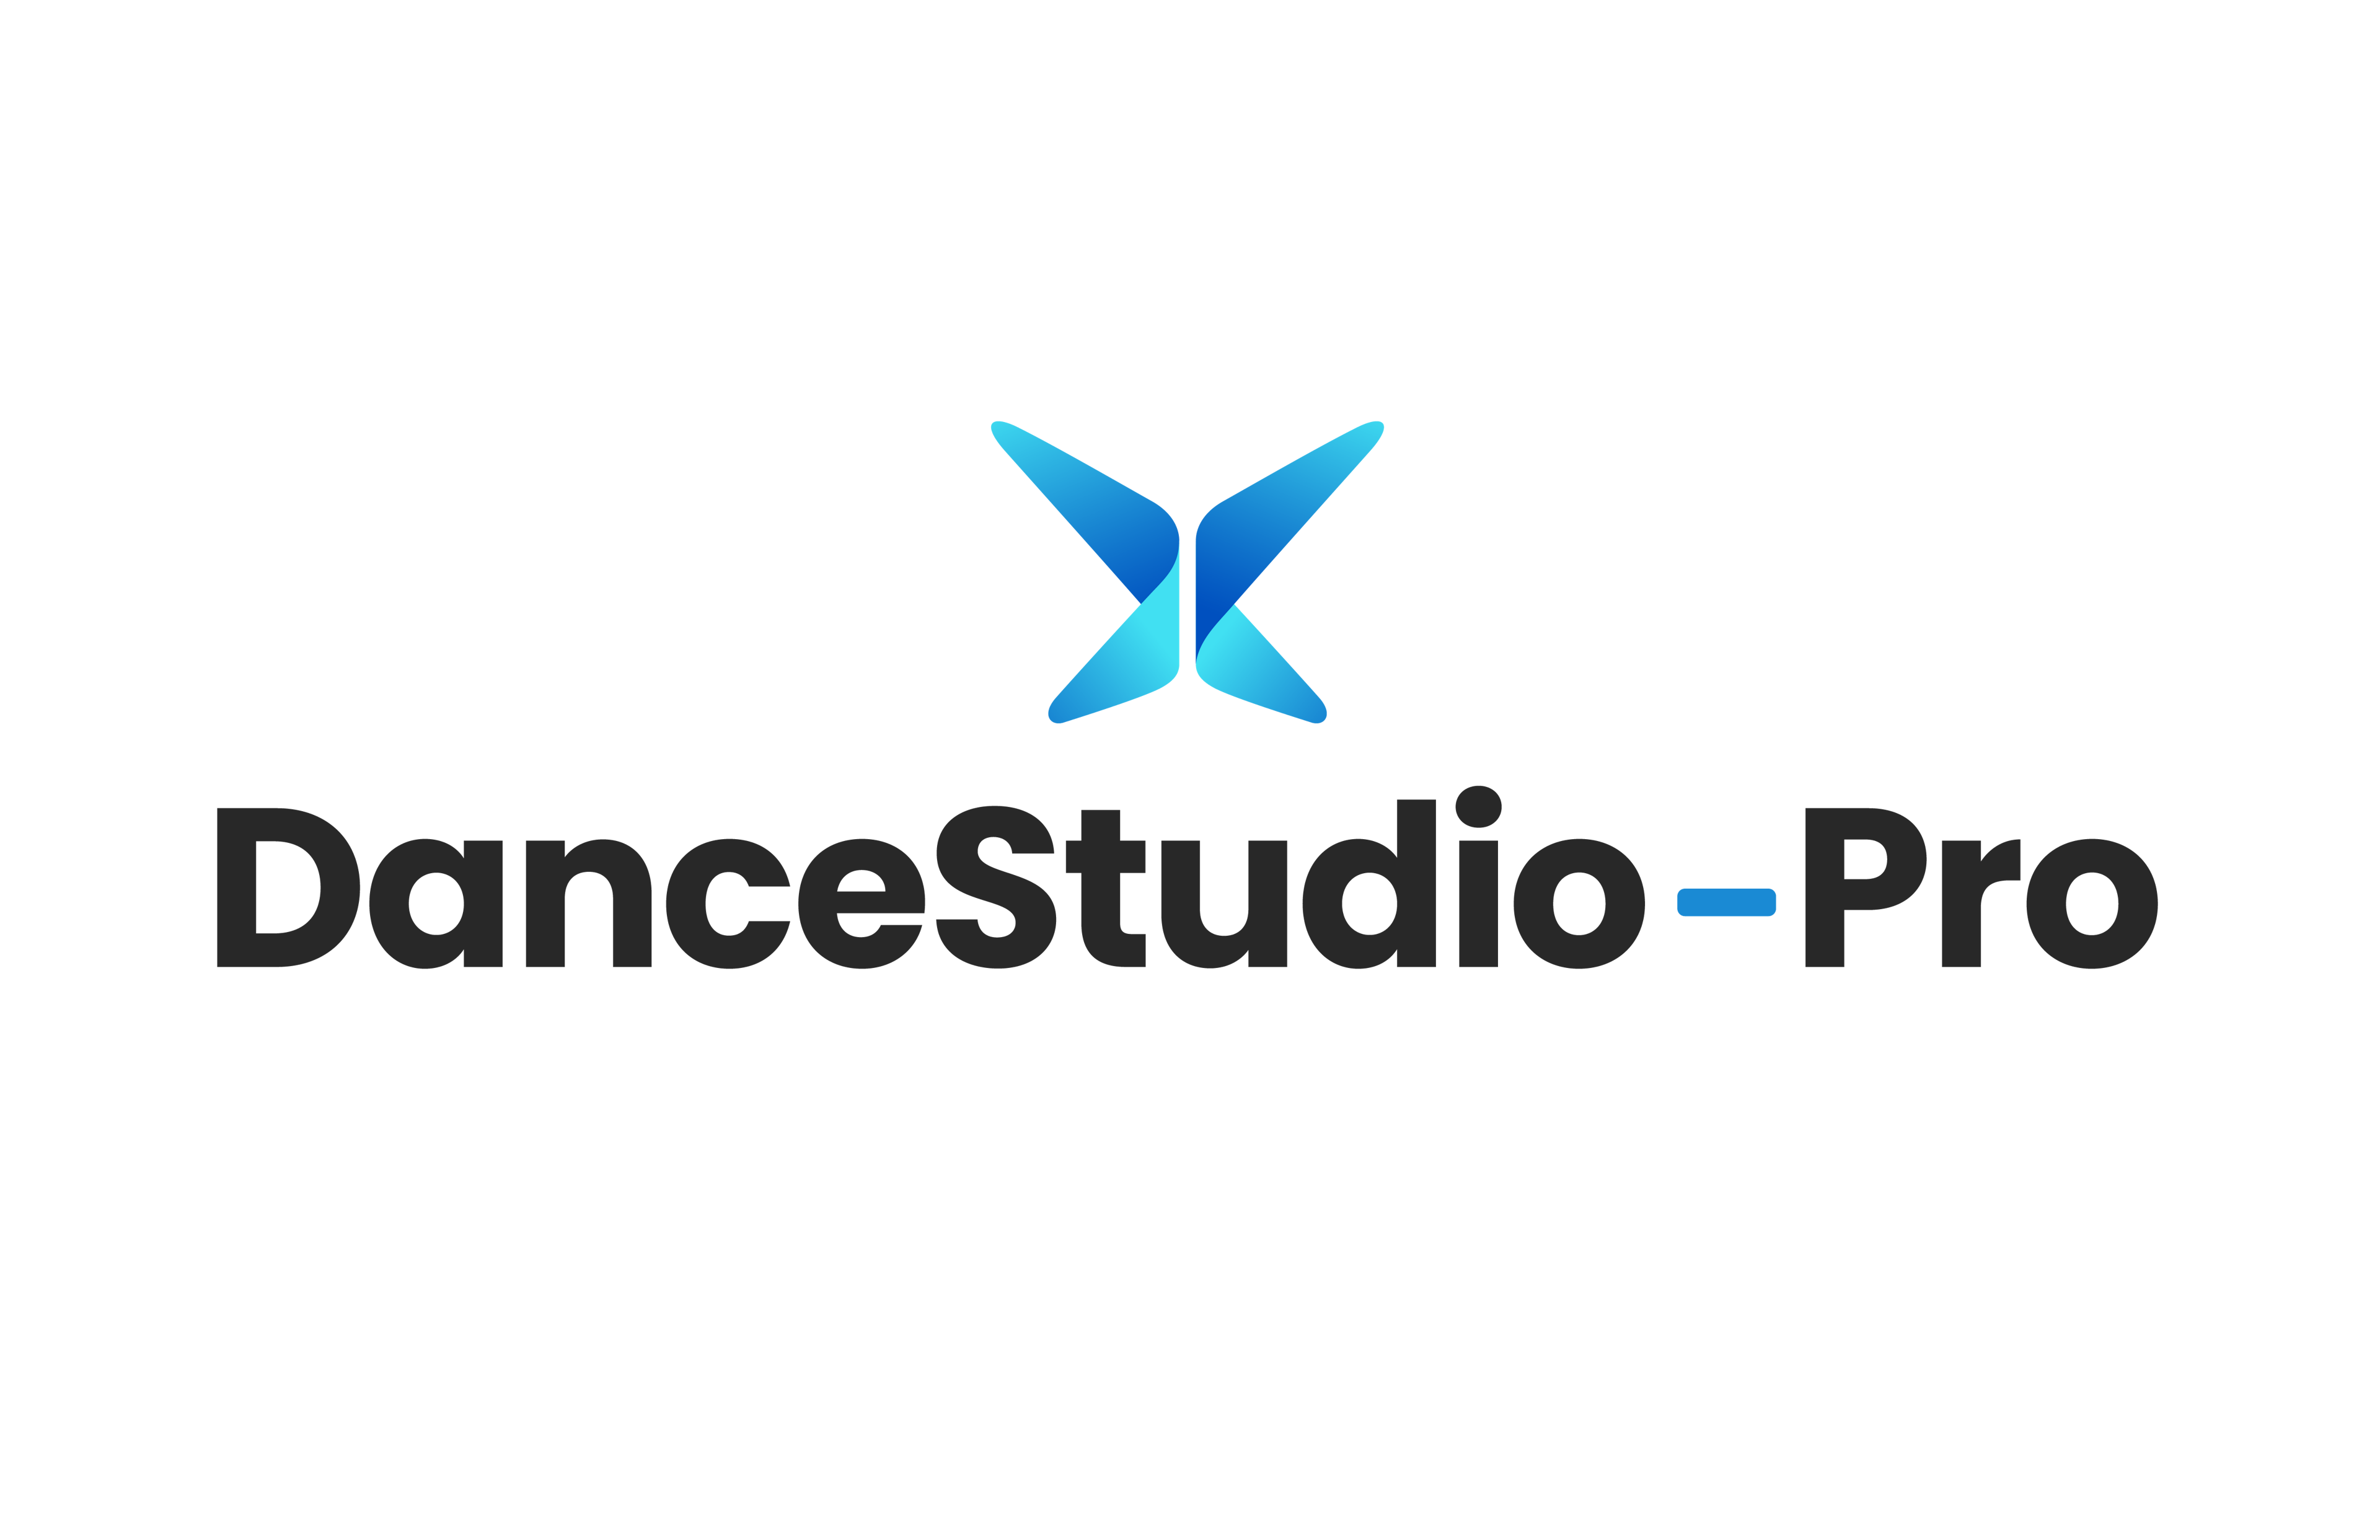 DanceStudio-Pro Logo